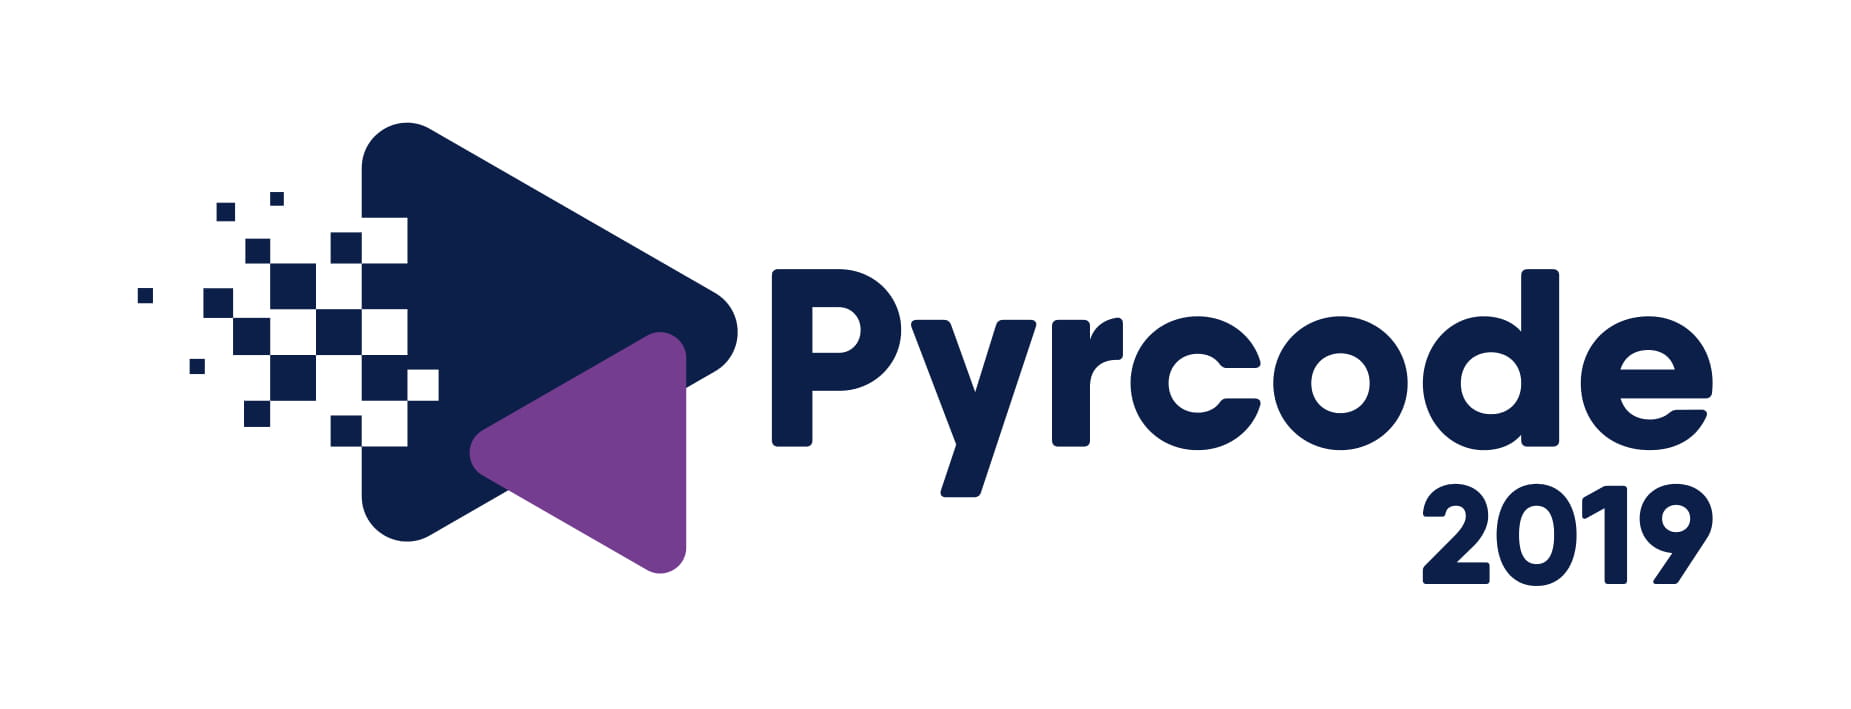 pyrcode-tech-conference-poznan-2019